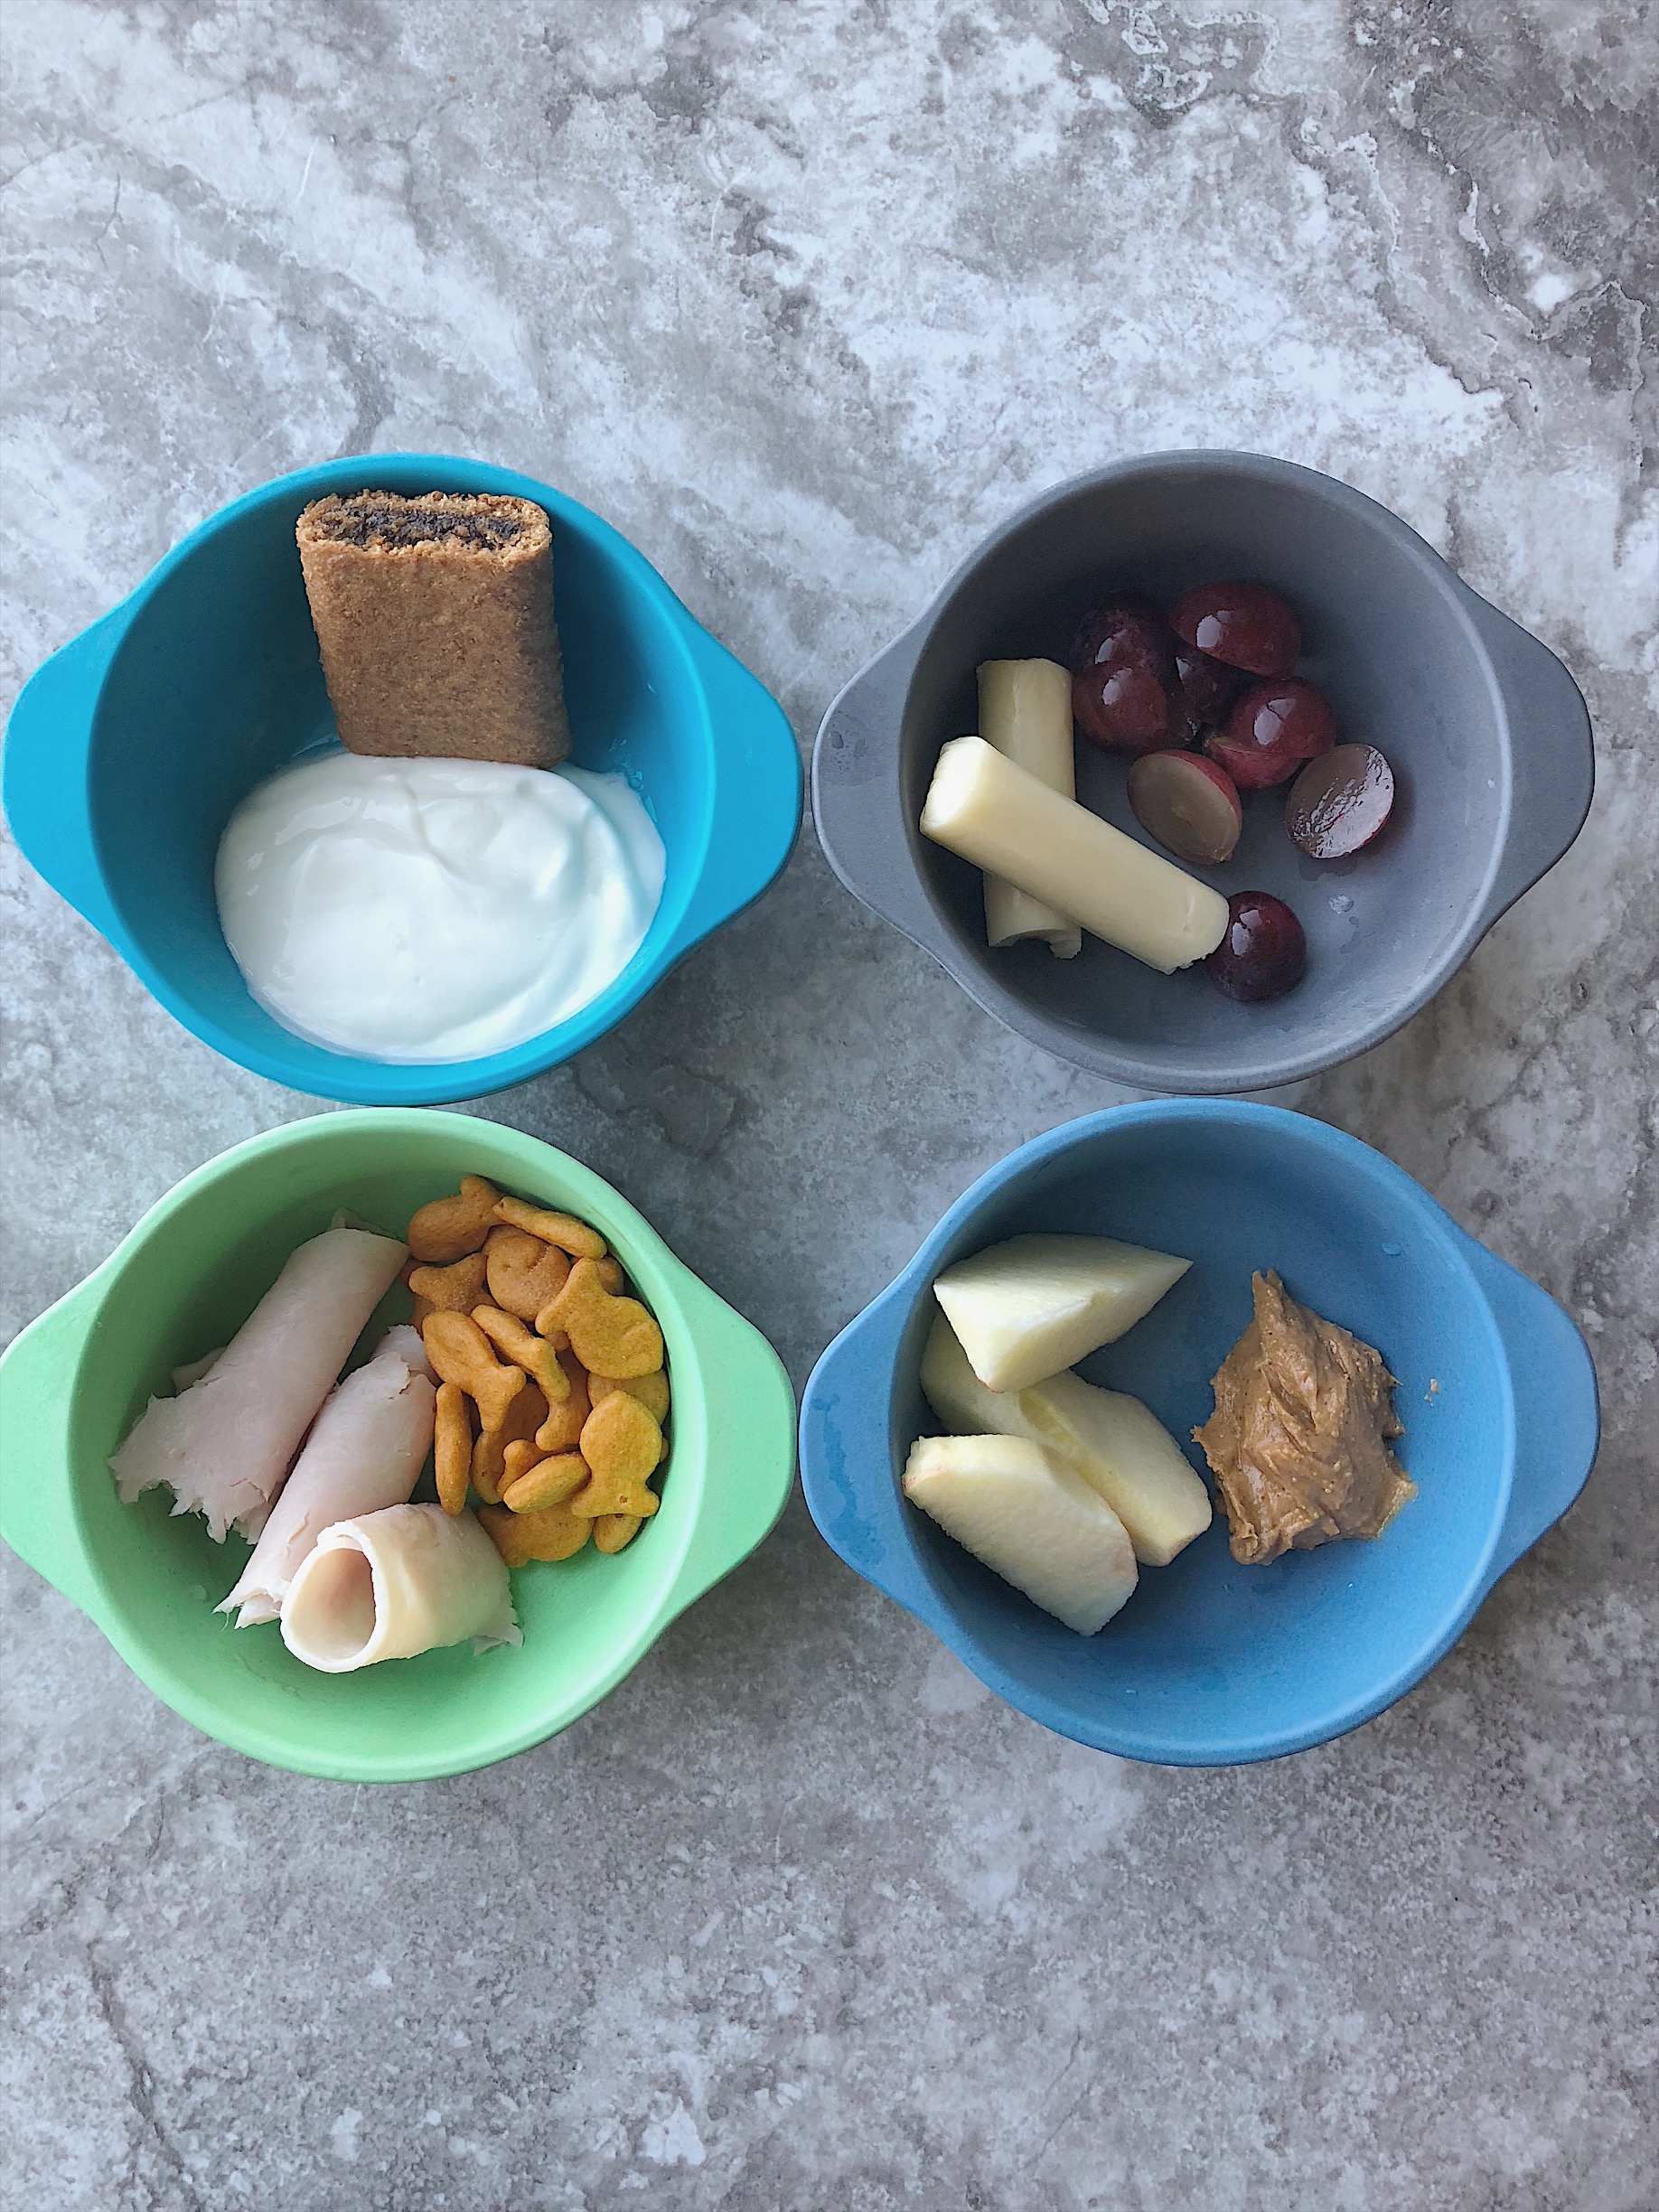 healthy toddler snacks